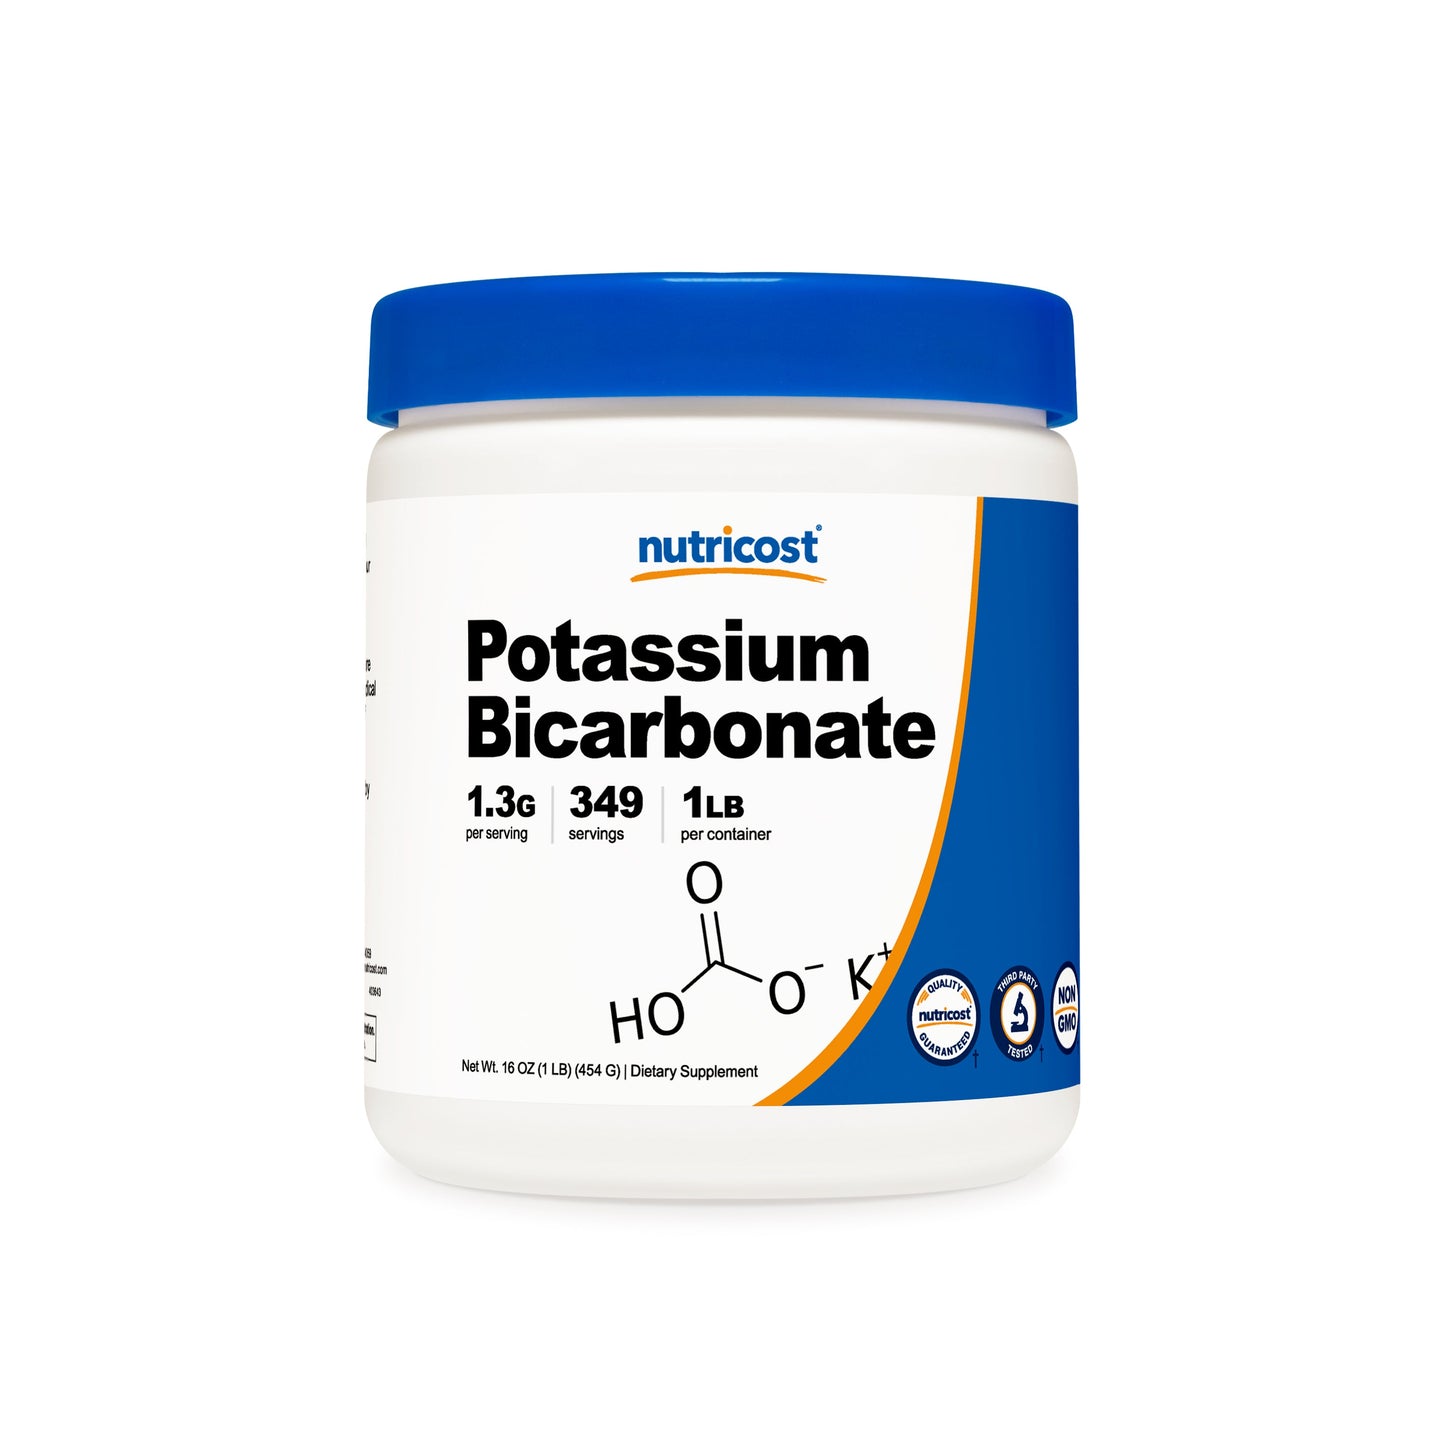 Nutricost Potassium Bicarbonate Powder